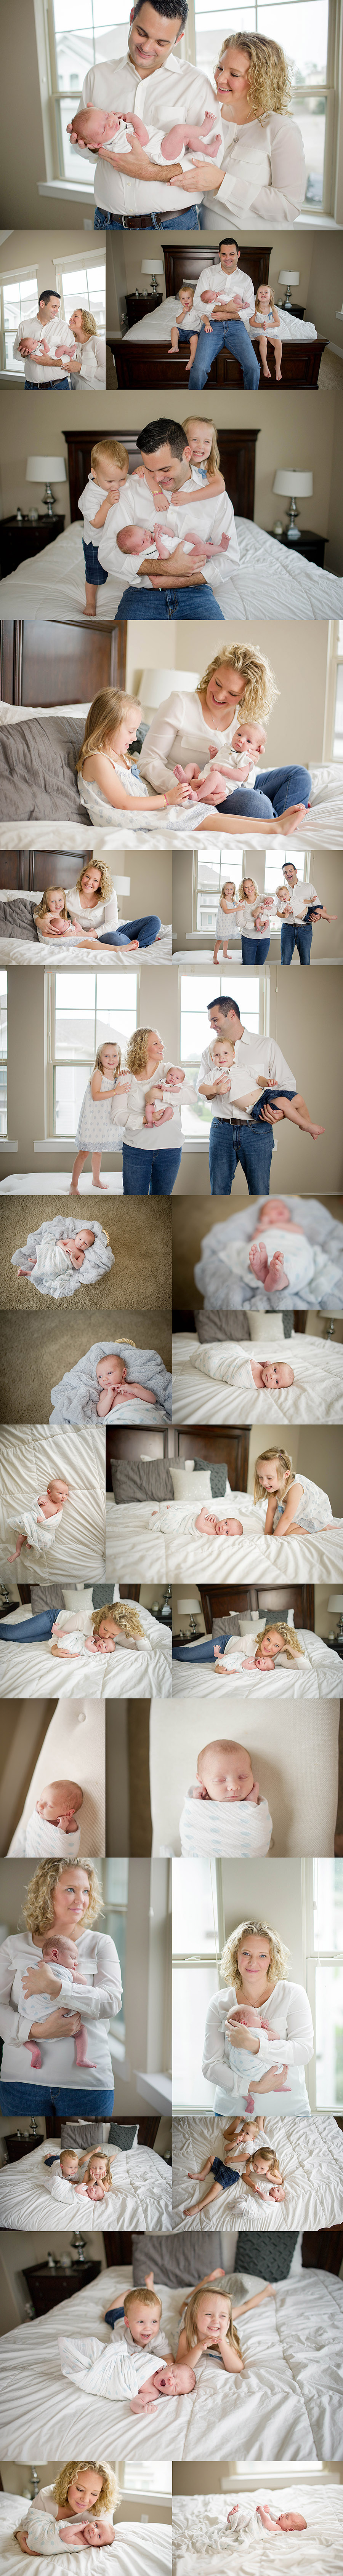 Newborn Home Photography Houston